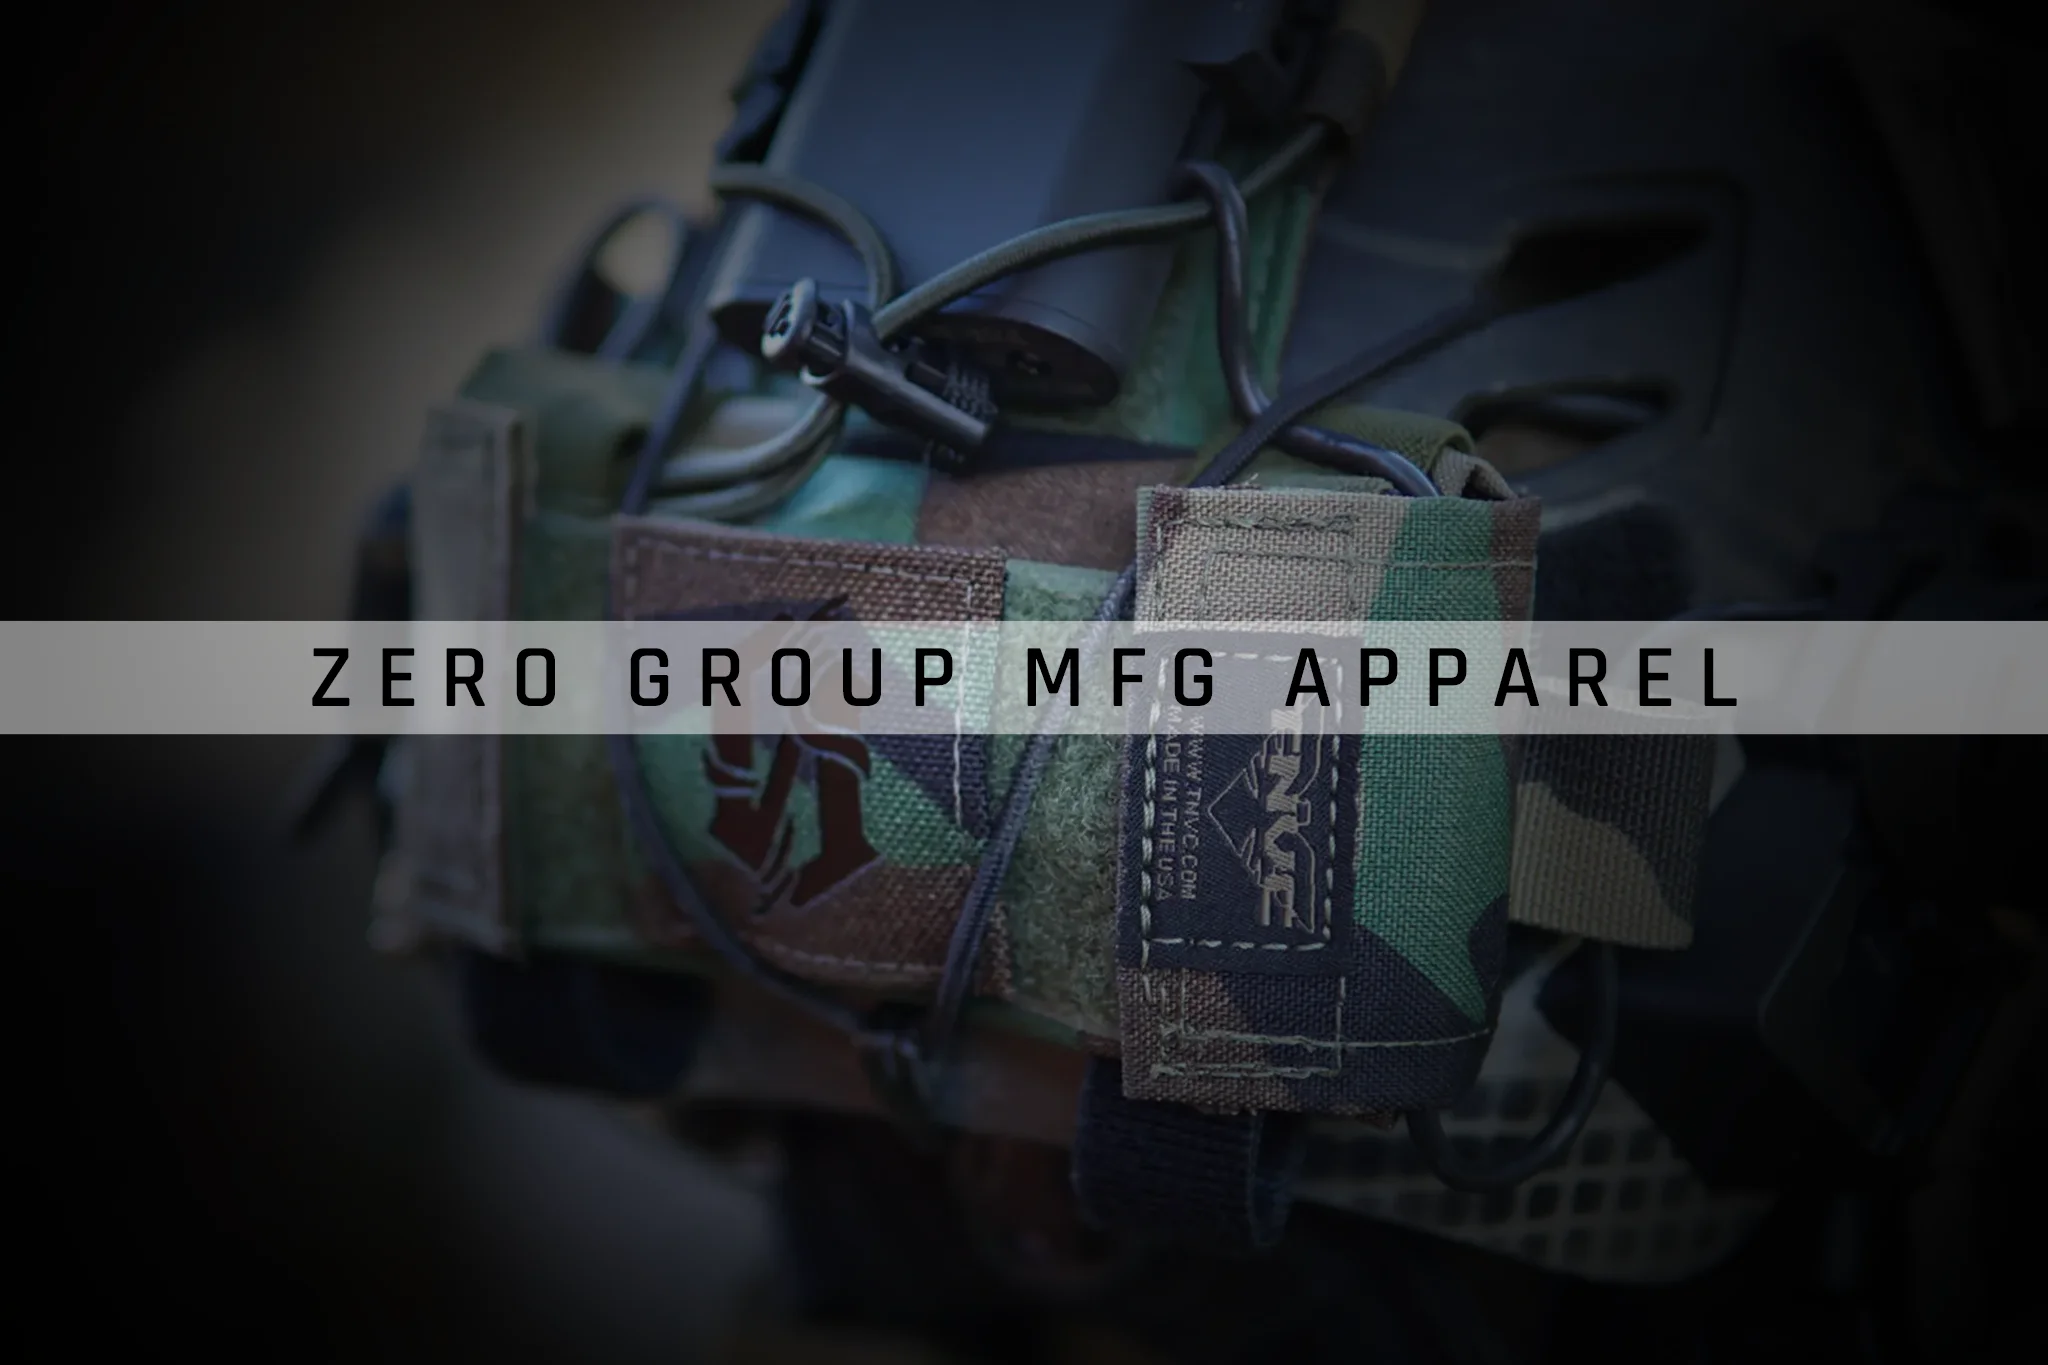 Zero Group Mfg Apparel